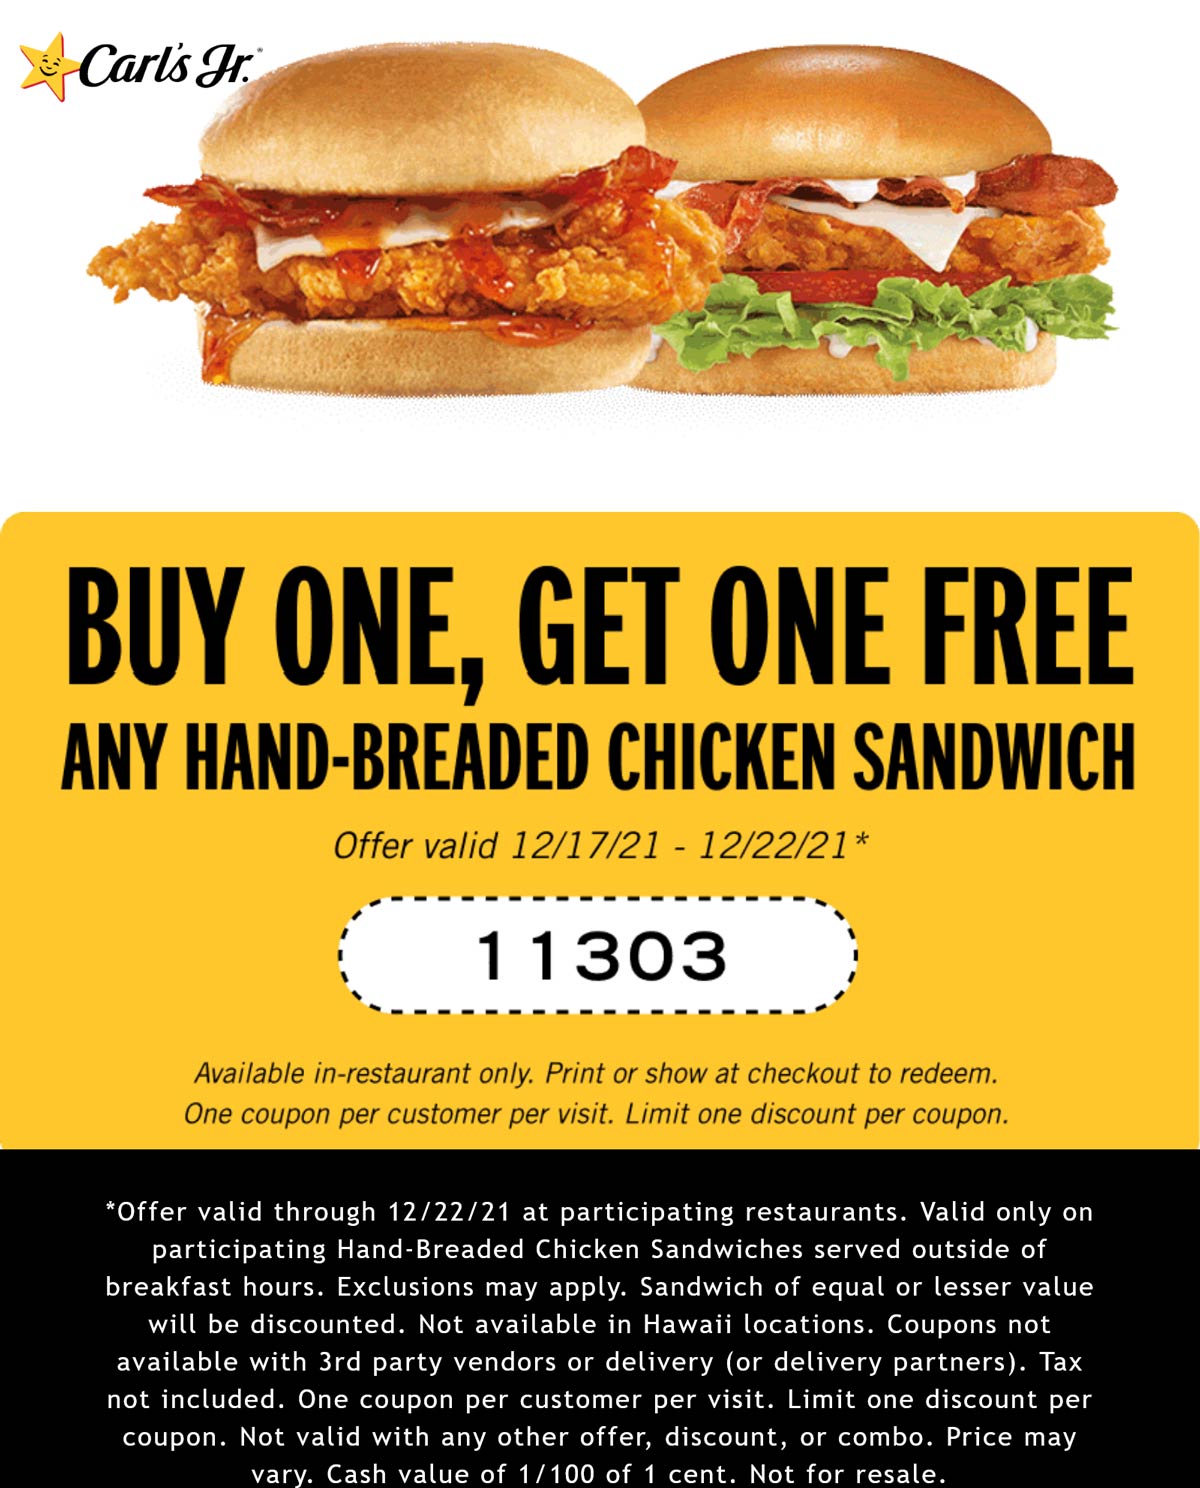 Carls Jr restaurants Coupon  Second chicken sandwich free at Carls Jr #carlsjr 